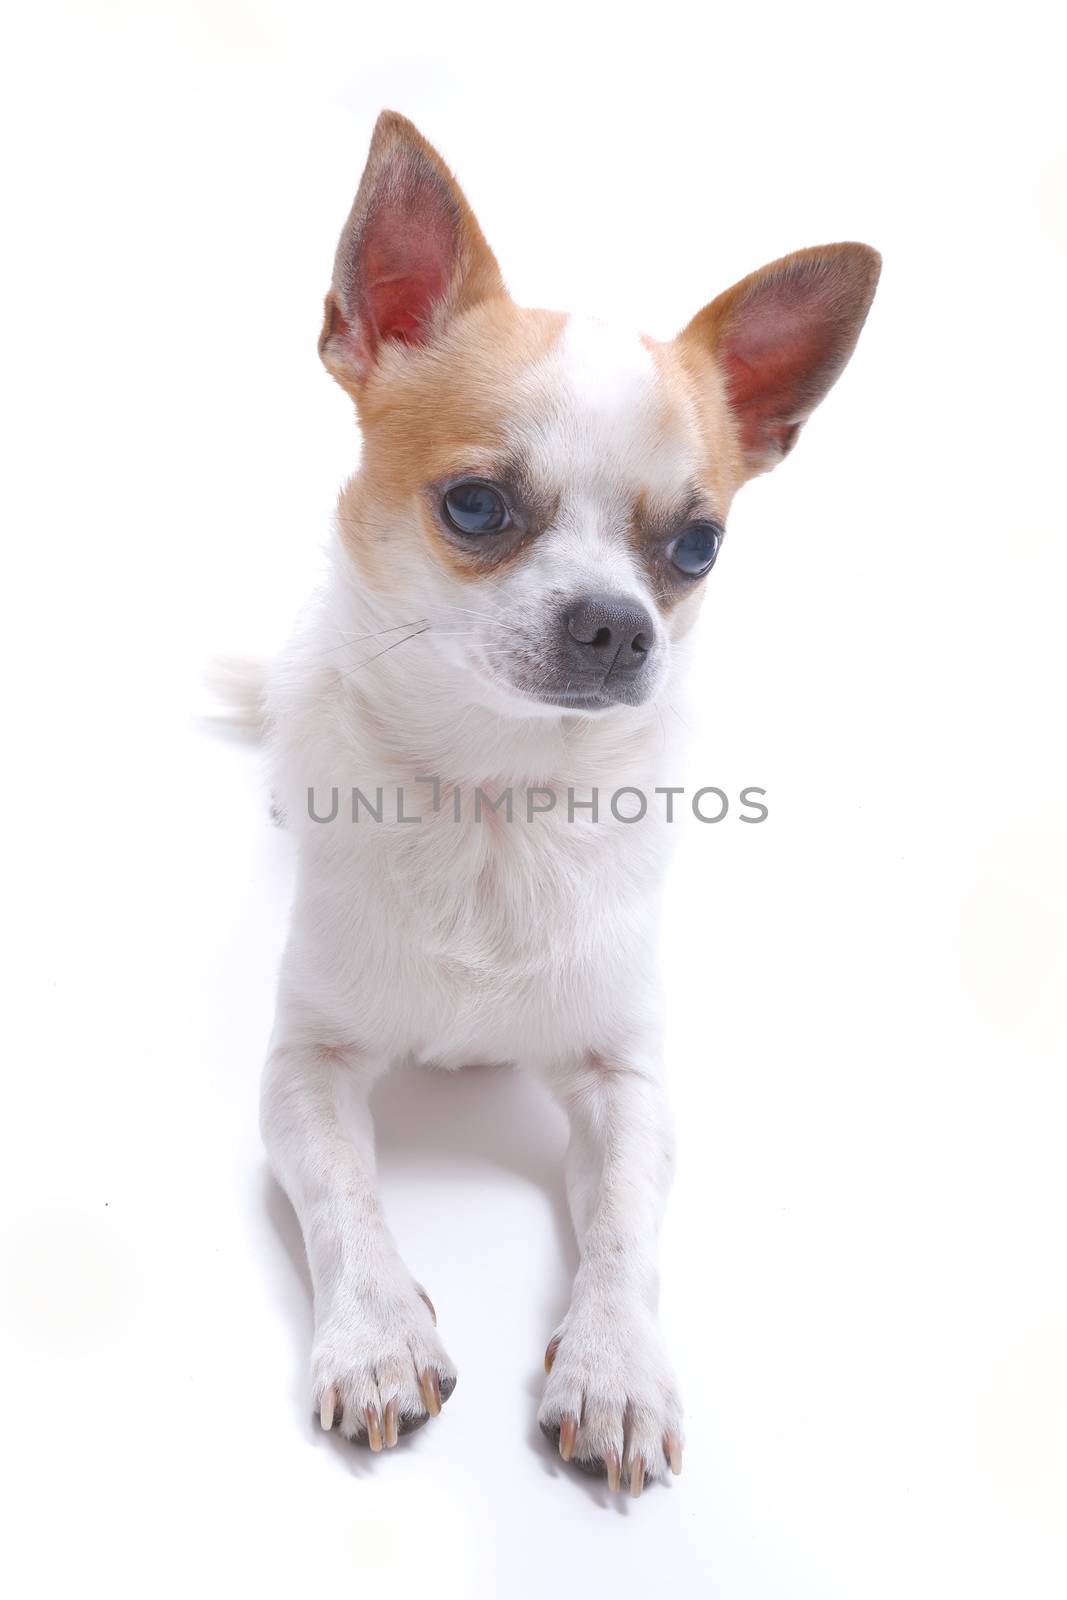 Nice chihuahua dog portrait on white background.